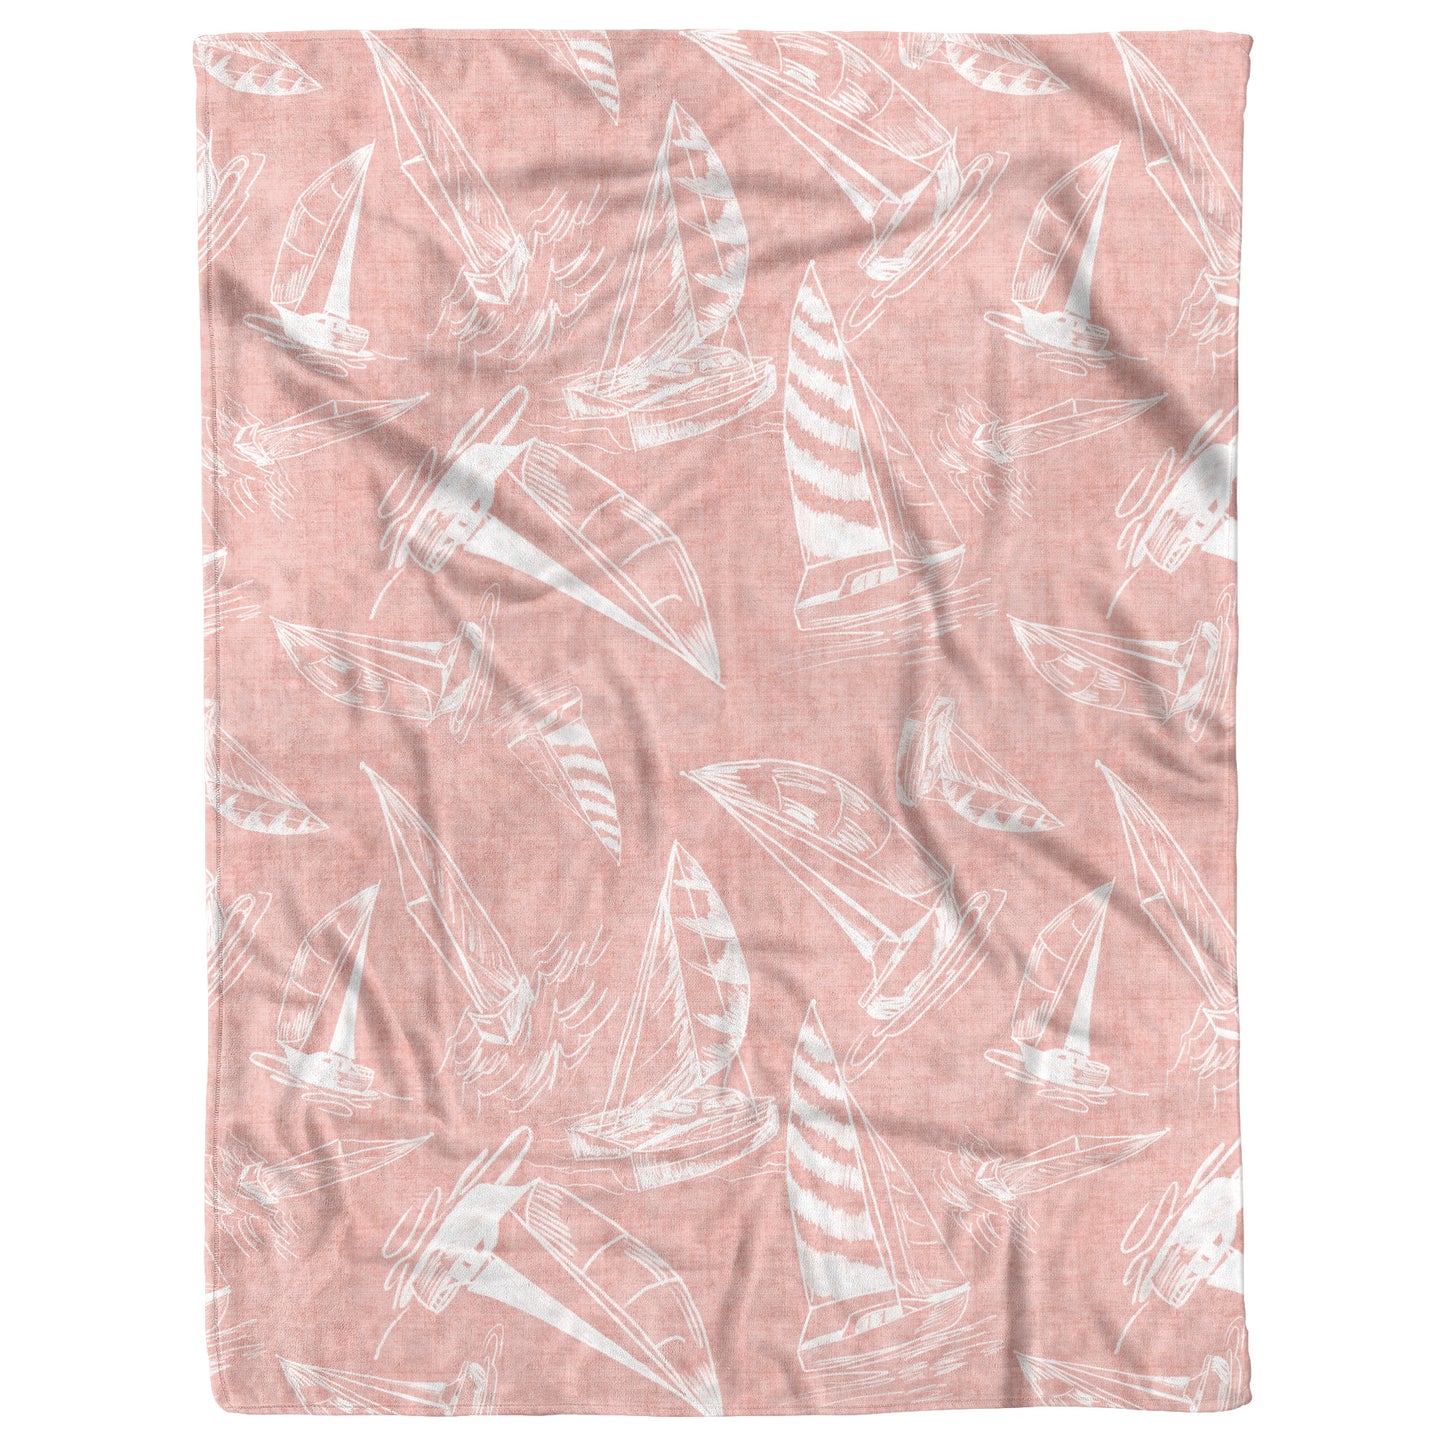 Sailboat Sketches on Coral Linen Texture Background, Fleece Blanket